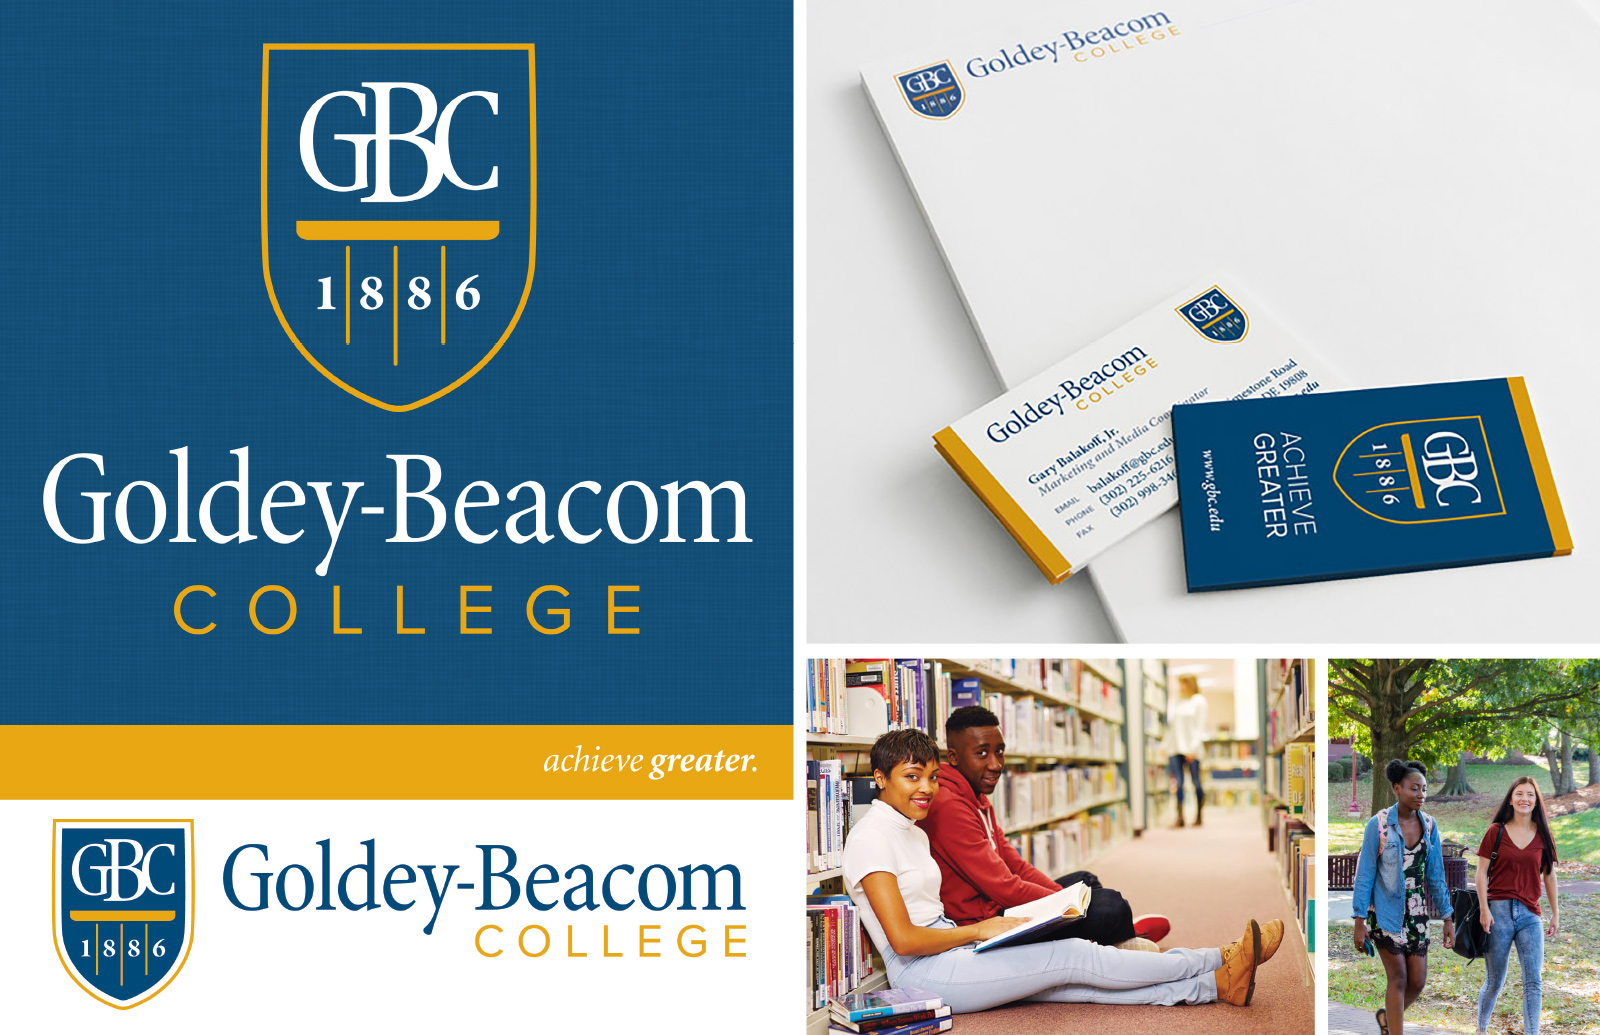 Goldey-Beacom College logo, stationary, and photography